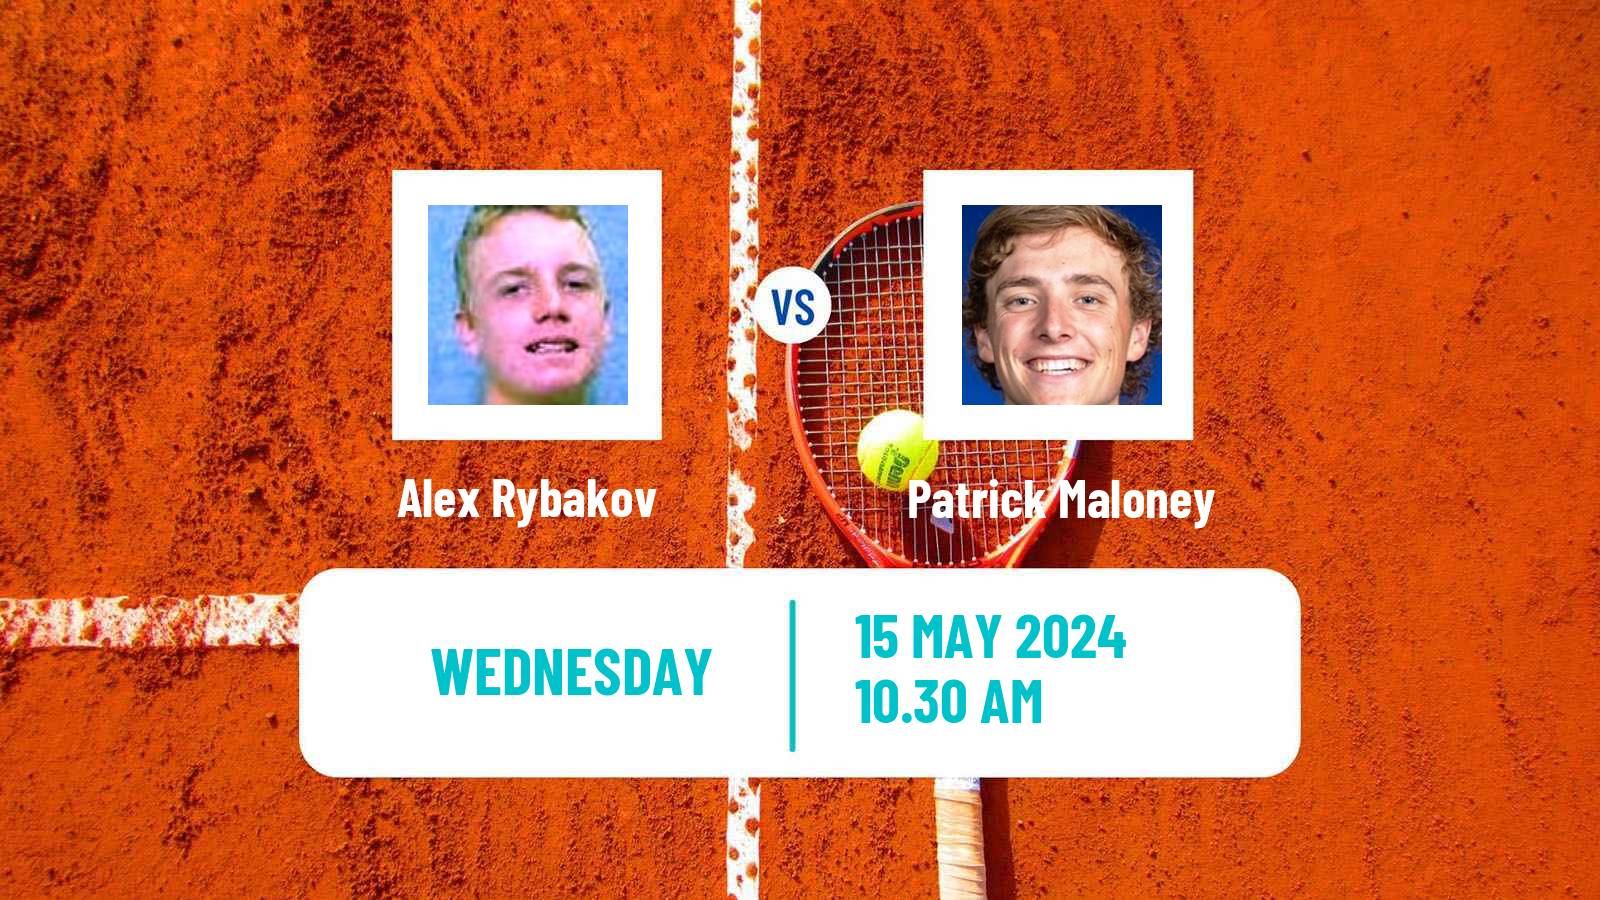 Tennis ITF M25 Pensacola Fl Men Alex Rybakov - Patrick Maloney